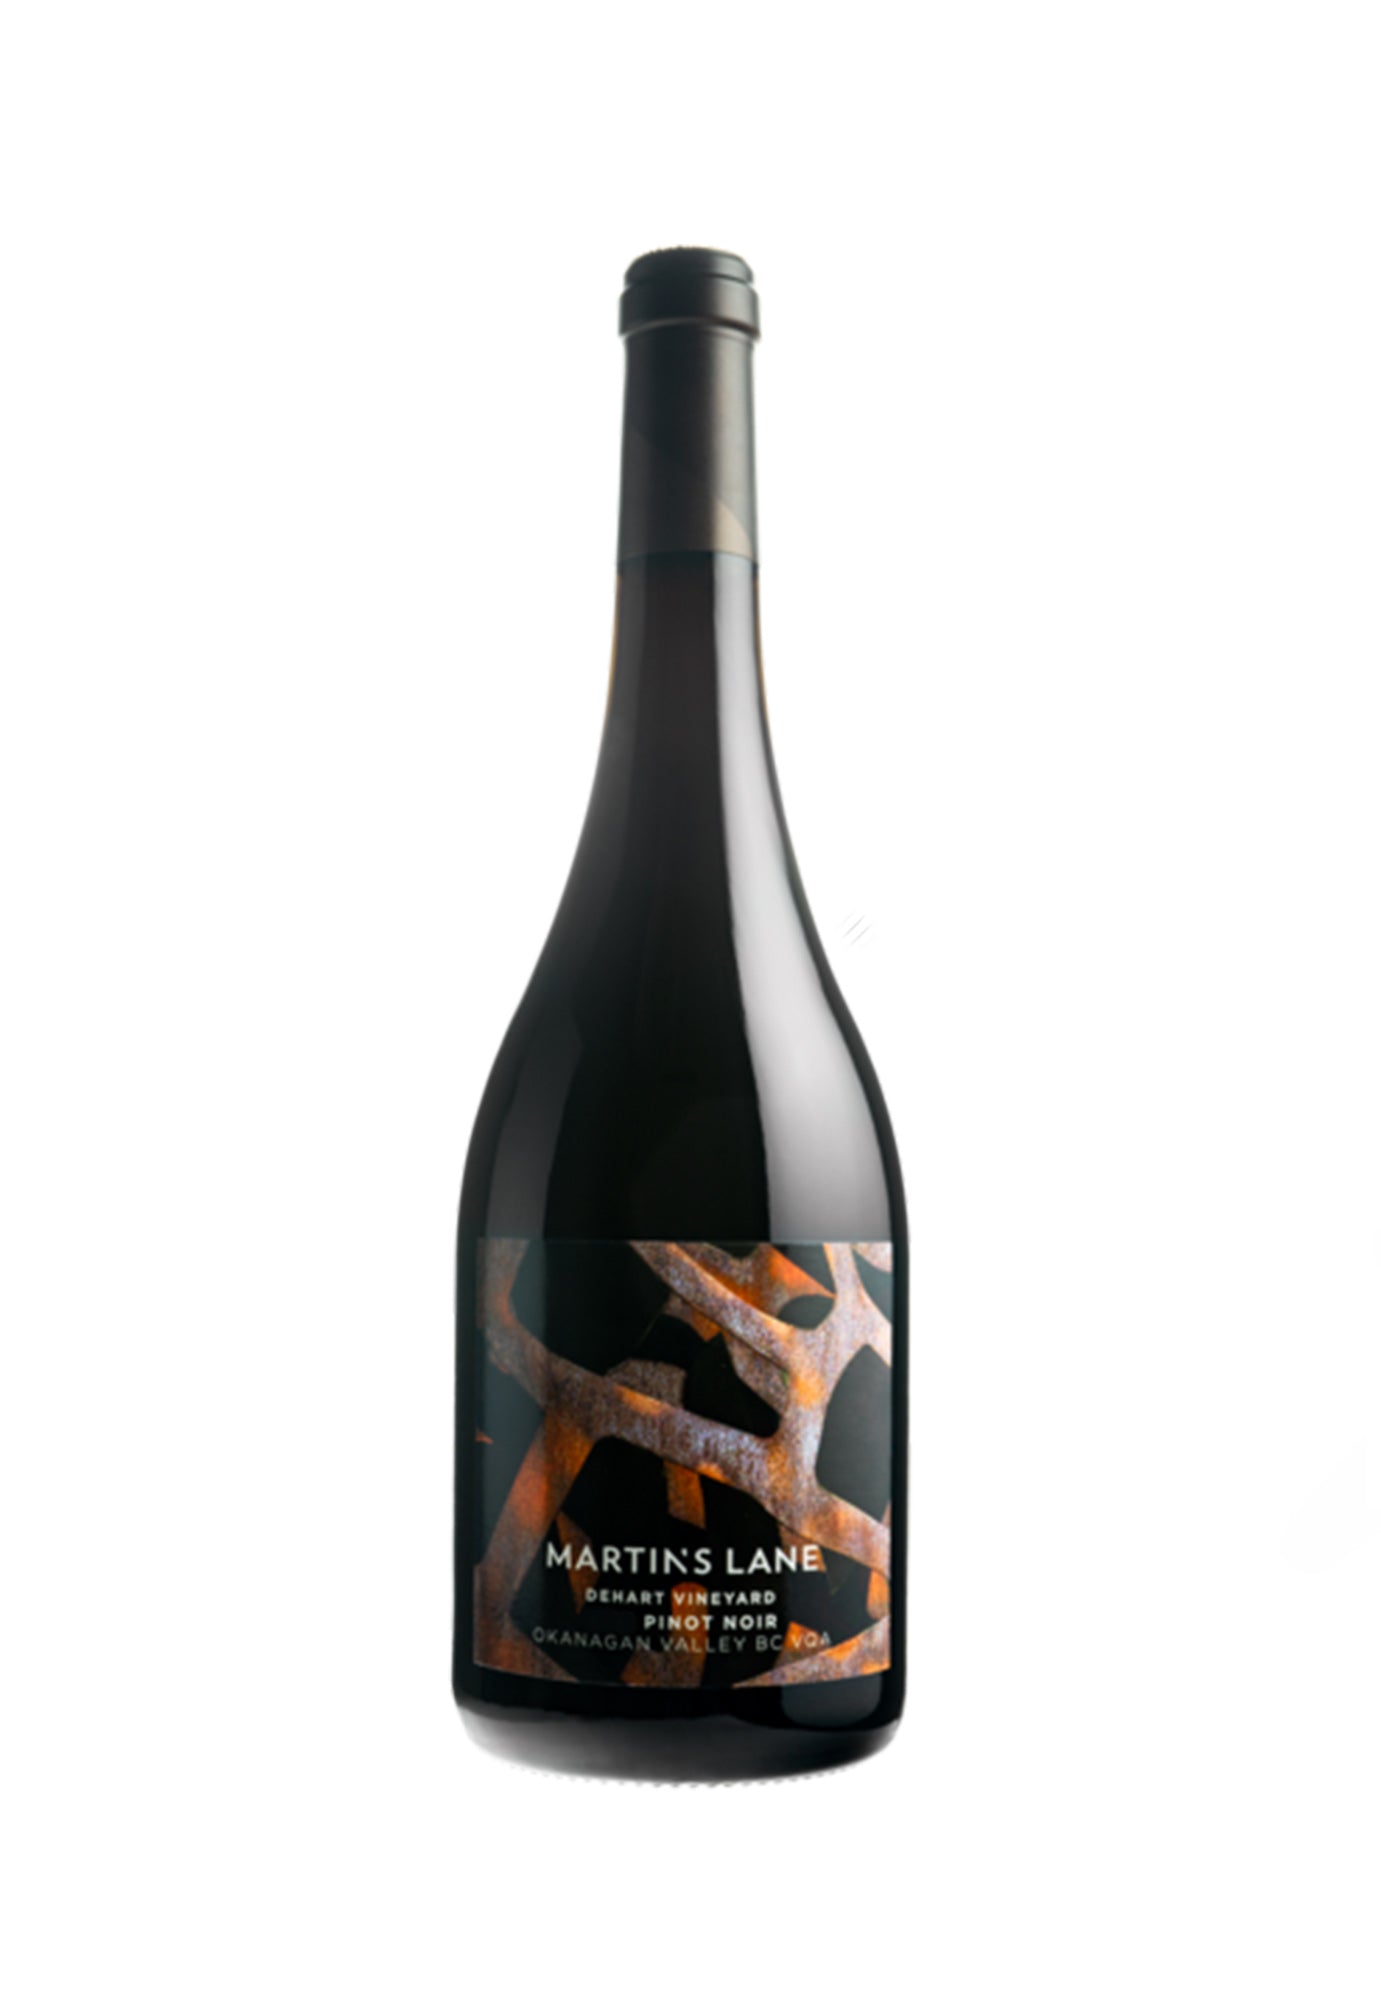 Martin's Lane Pinot Noir Dehart Vineyard 2015